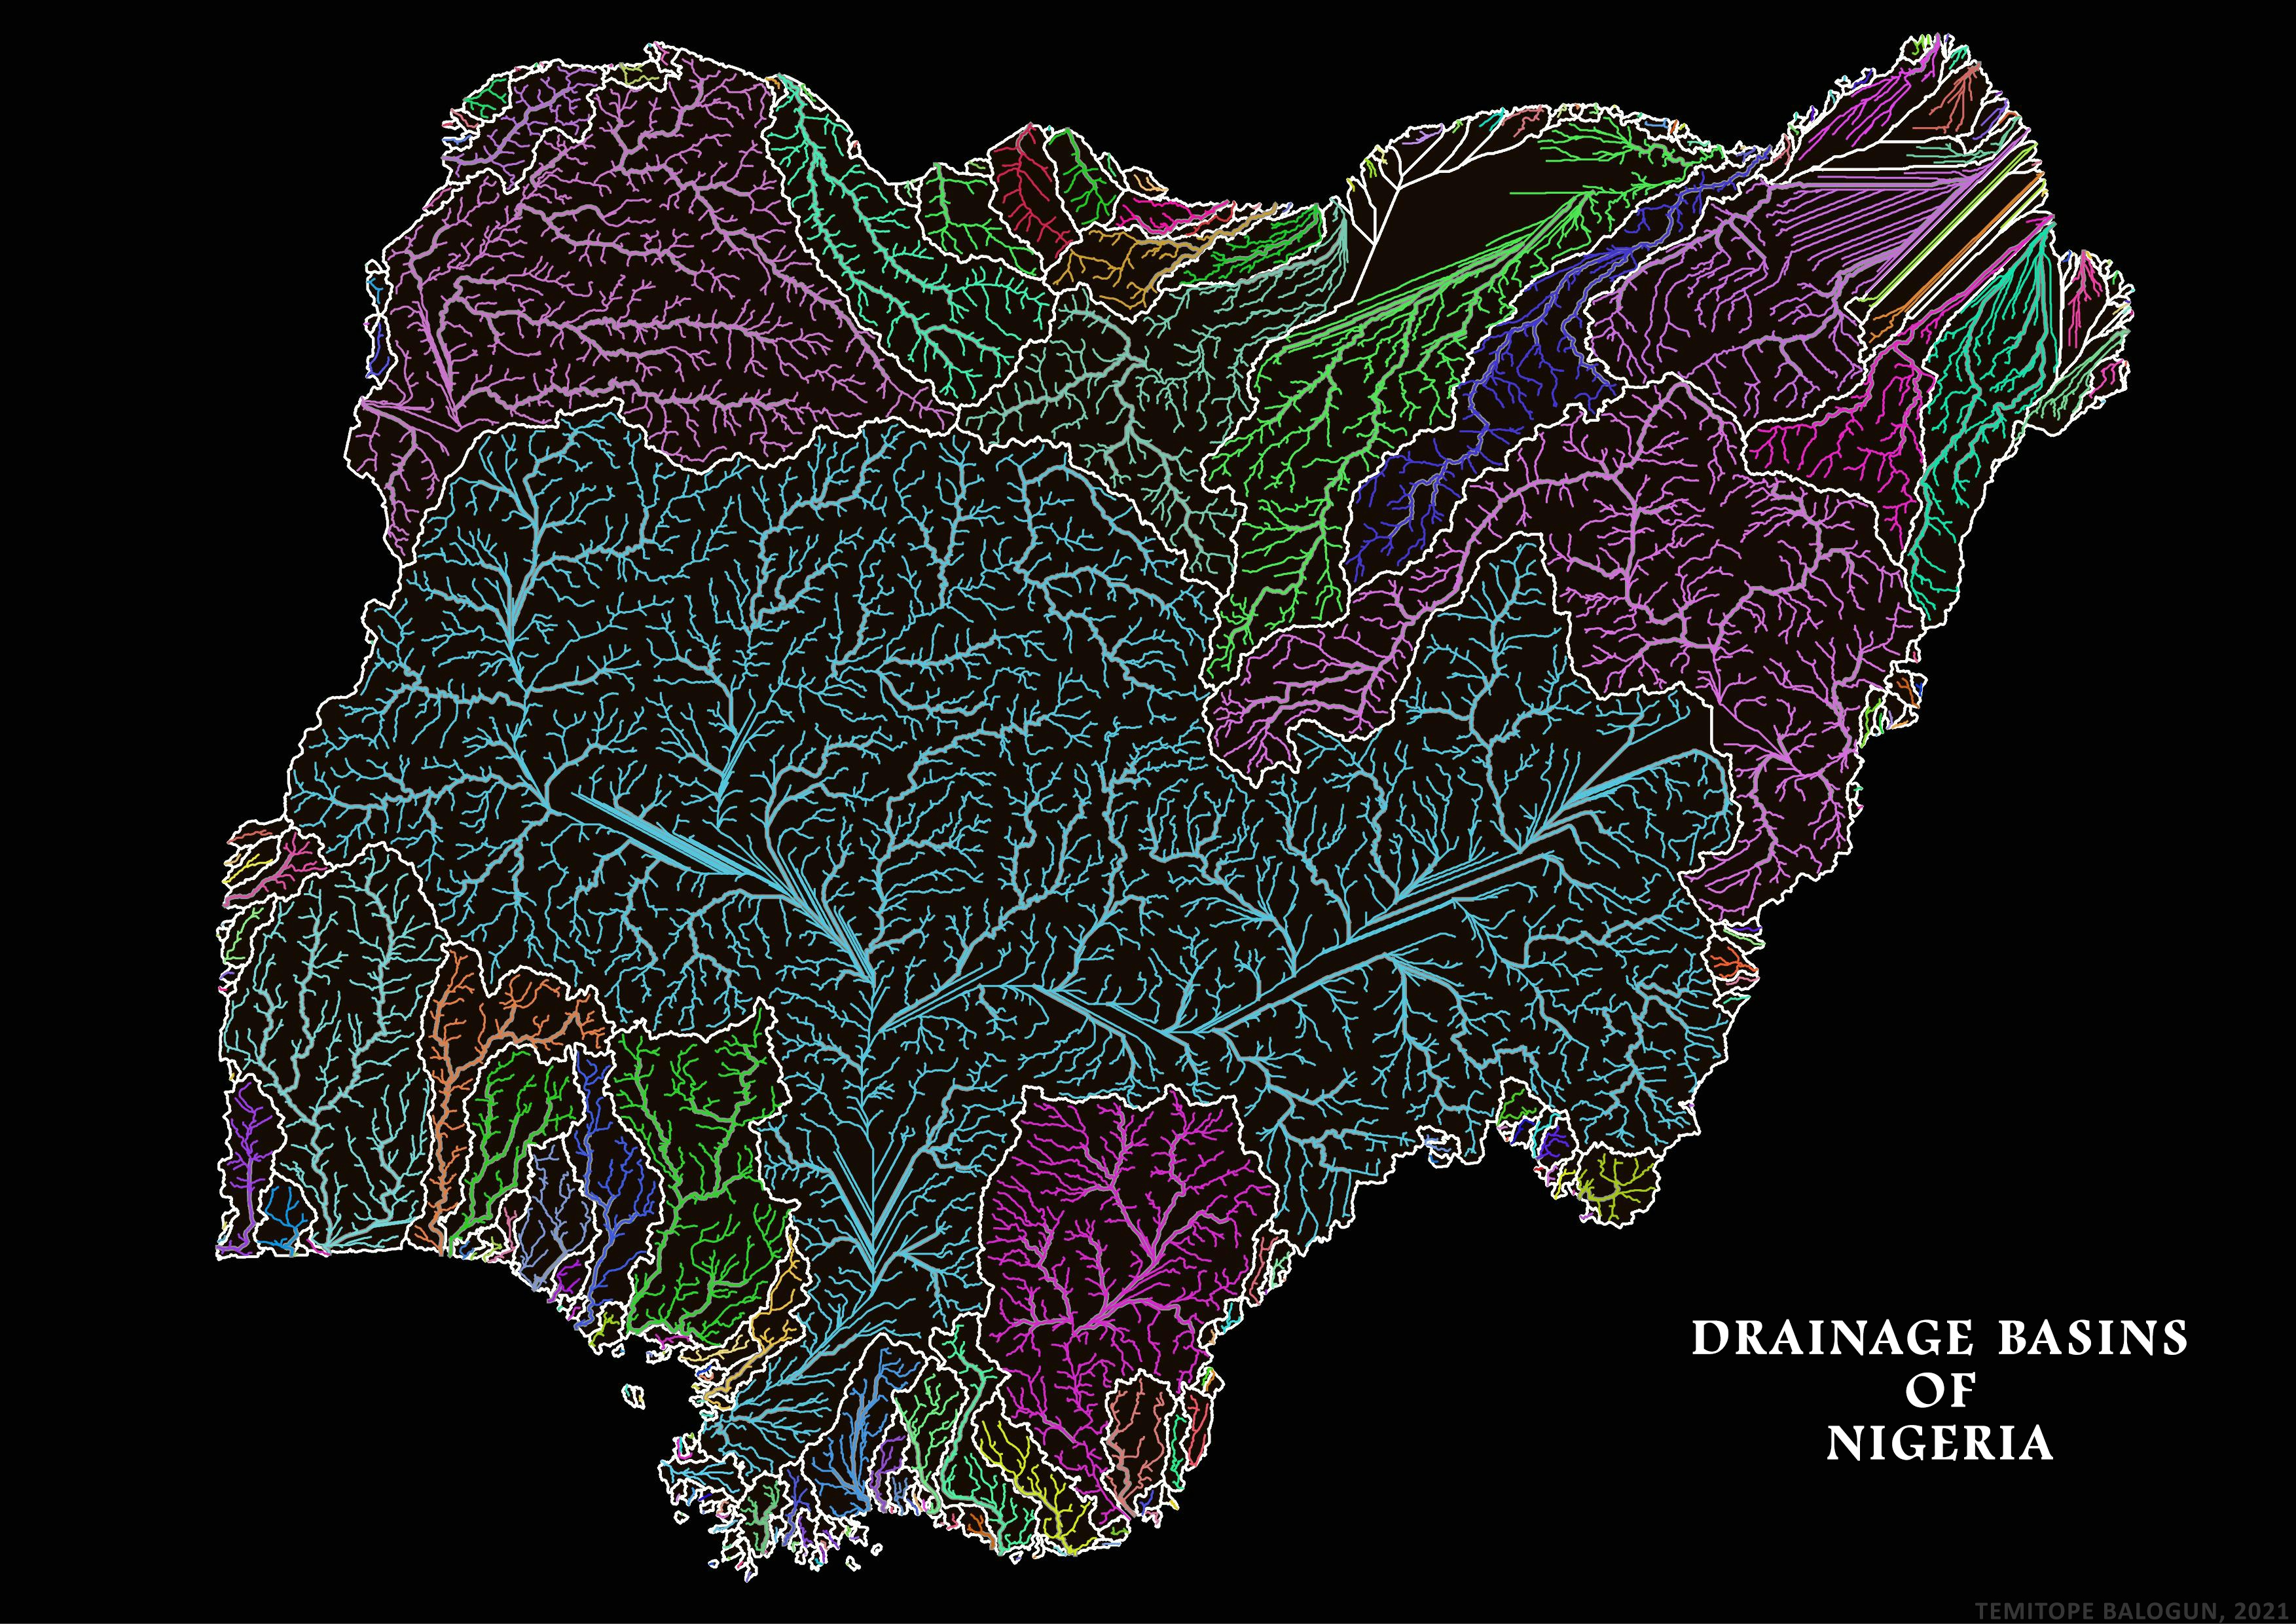 Drainage basins of Nigeria